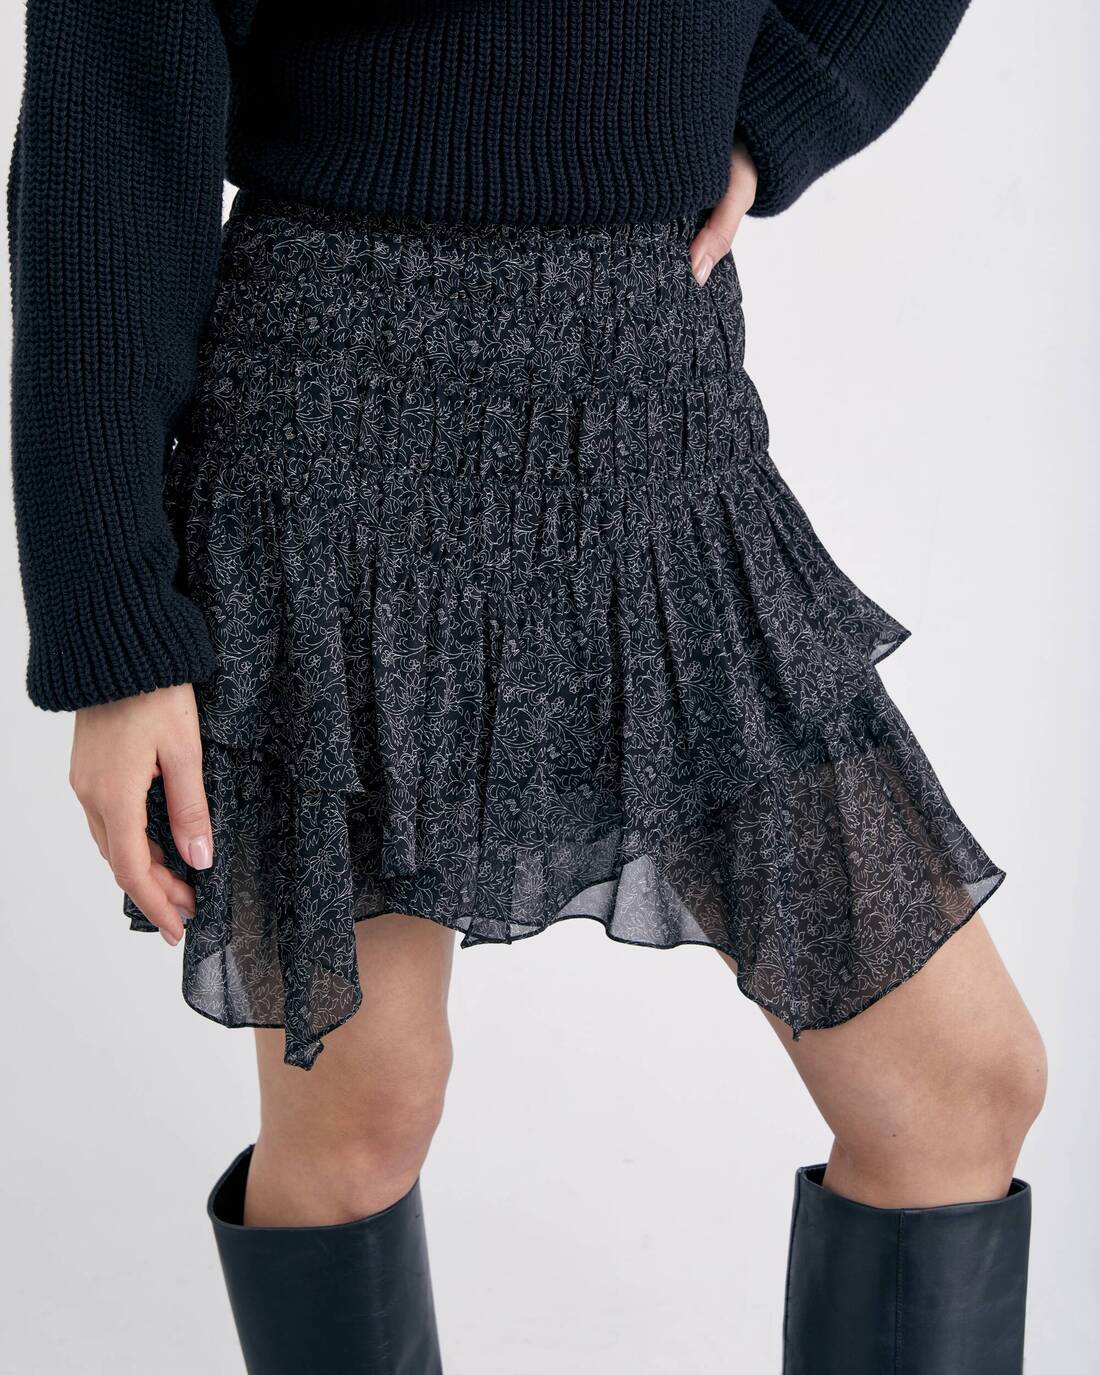 Minu skirt with ruffles